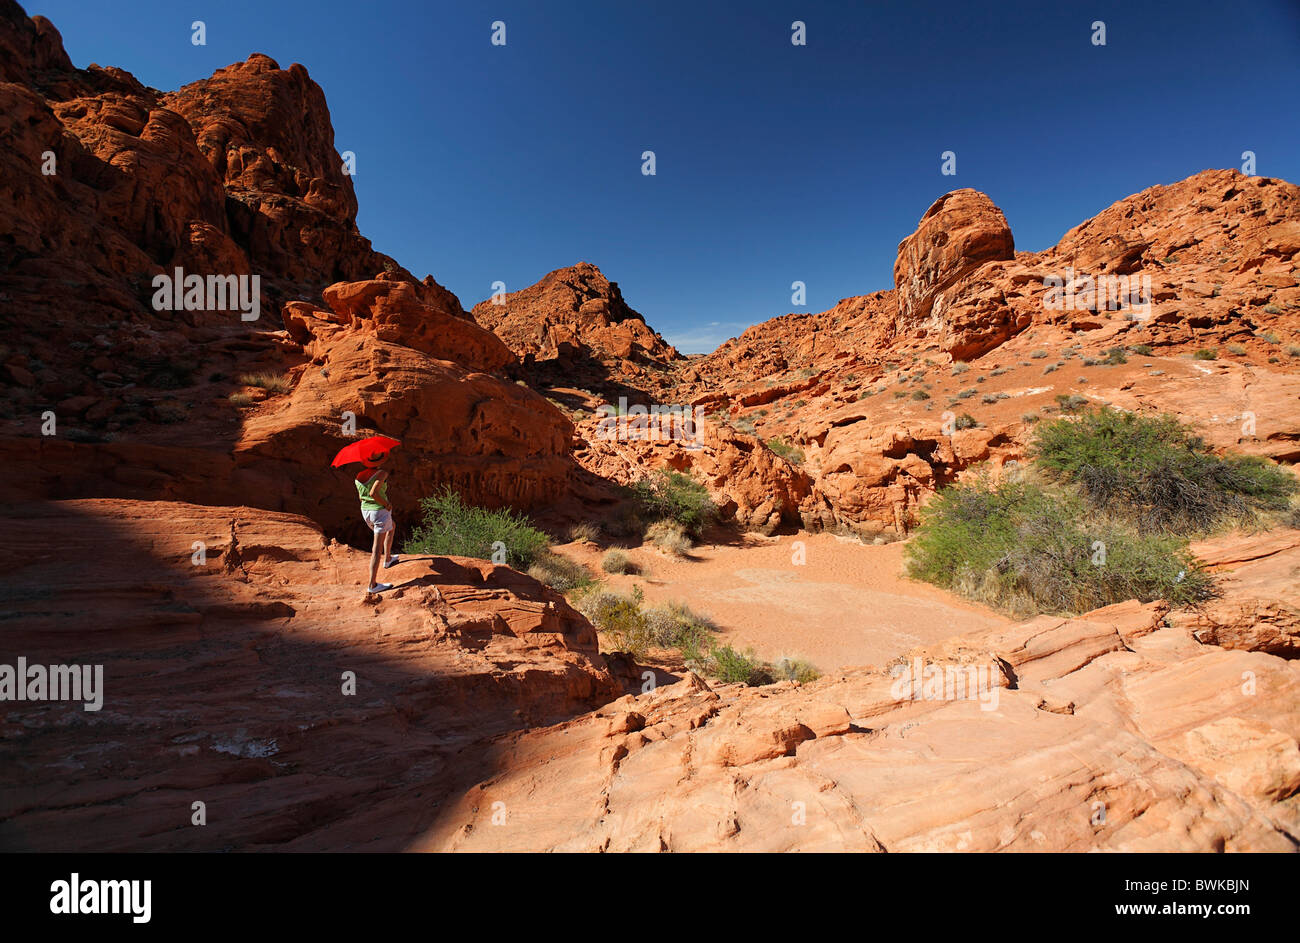 USA America North America Nevada Valley of Fire State park scenery rock cliff desert woman sunshade screen Stock Photo